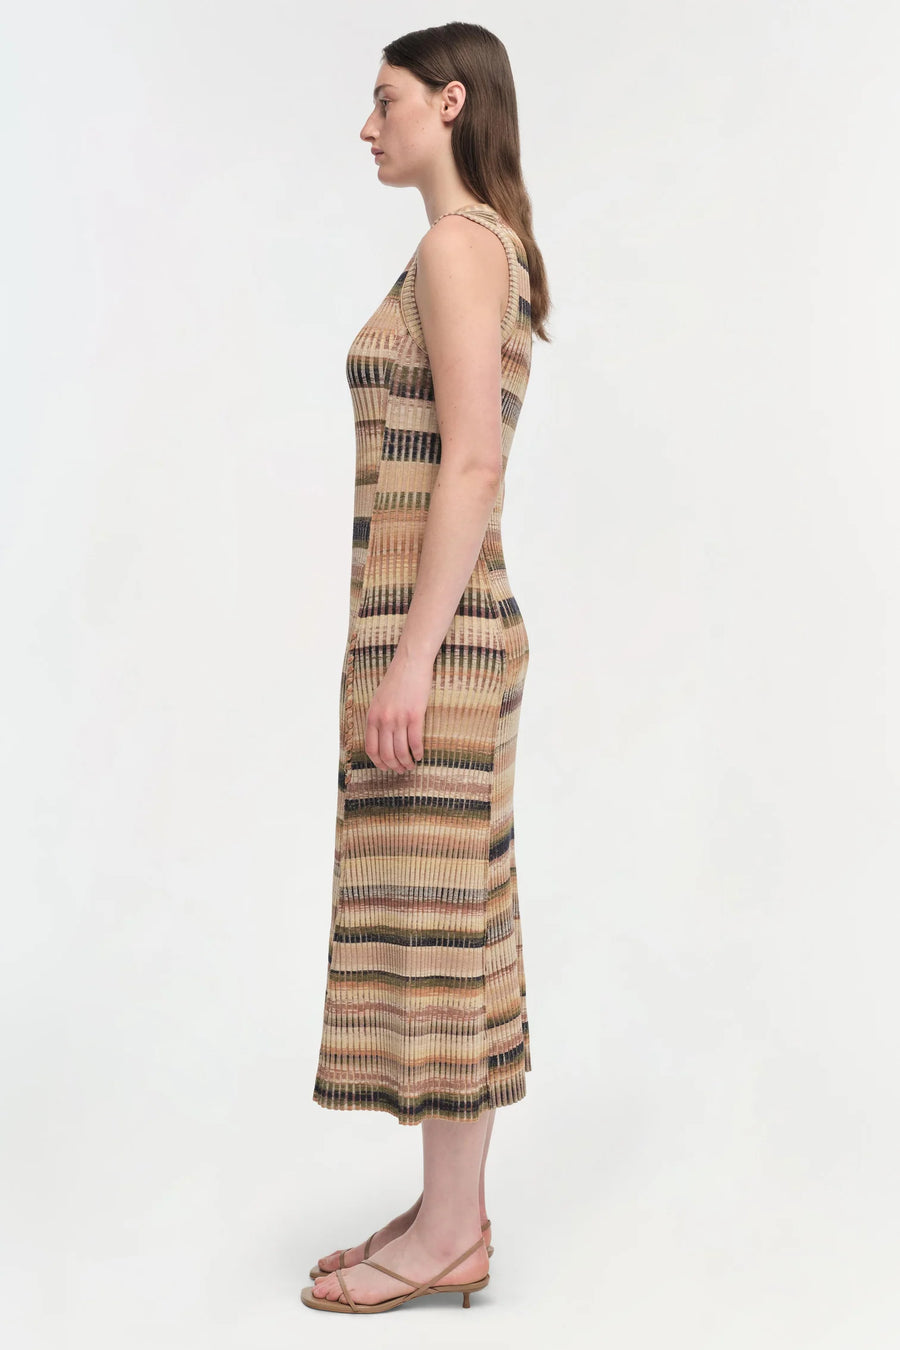 SIMKHAI Fairfax Sleeveless Dress